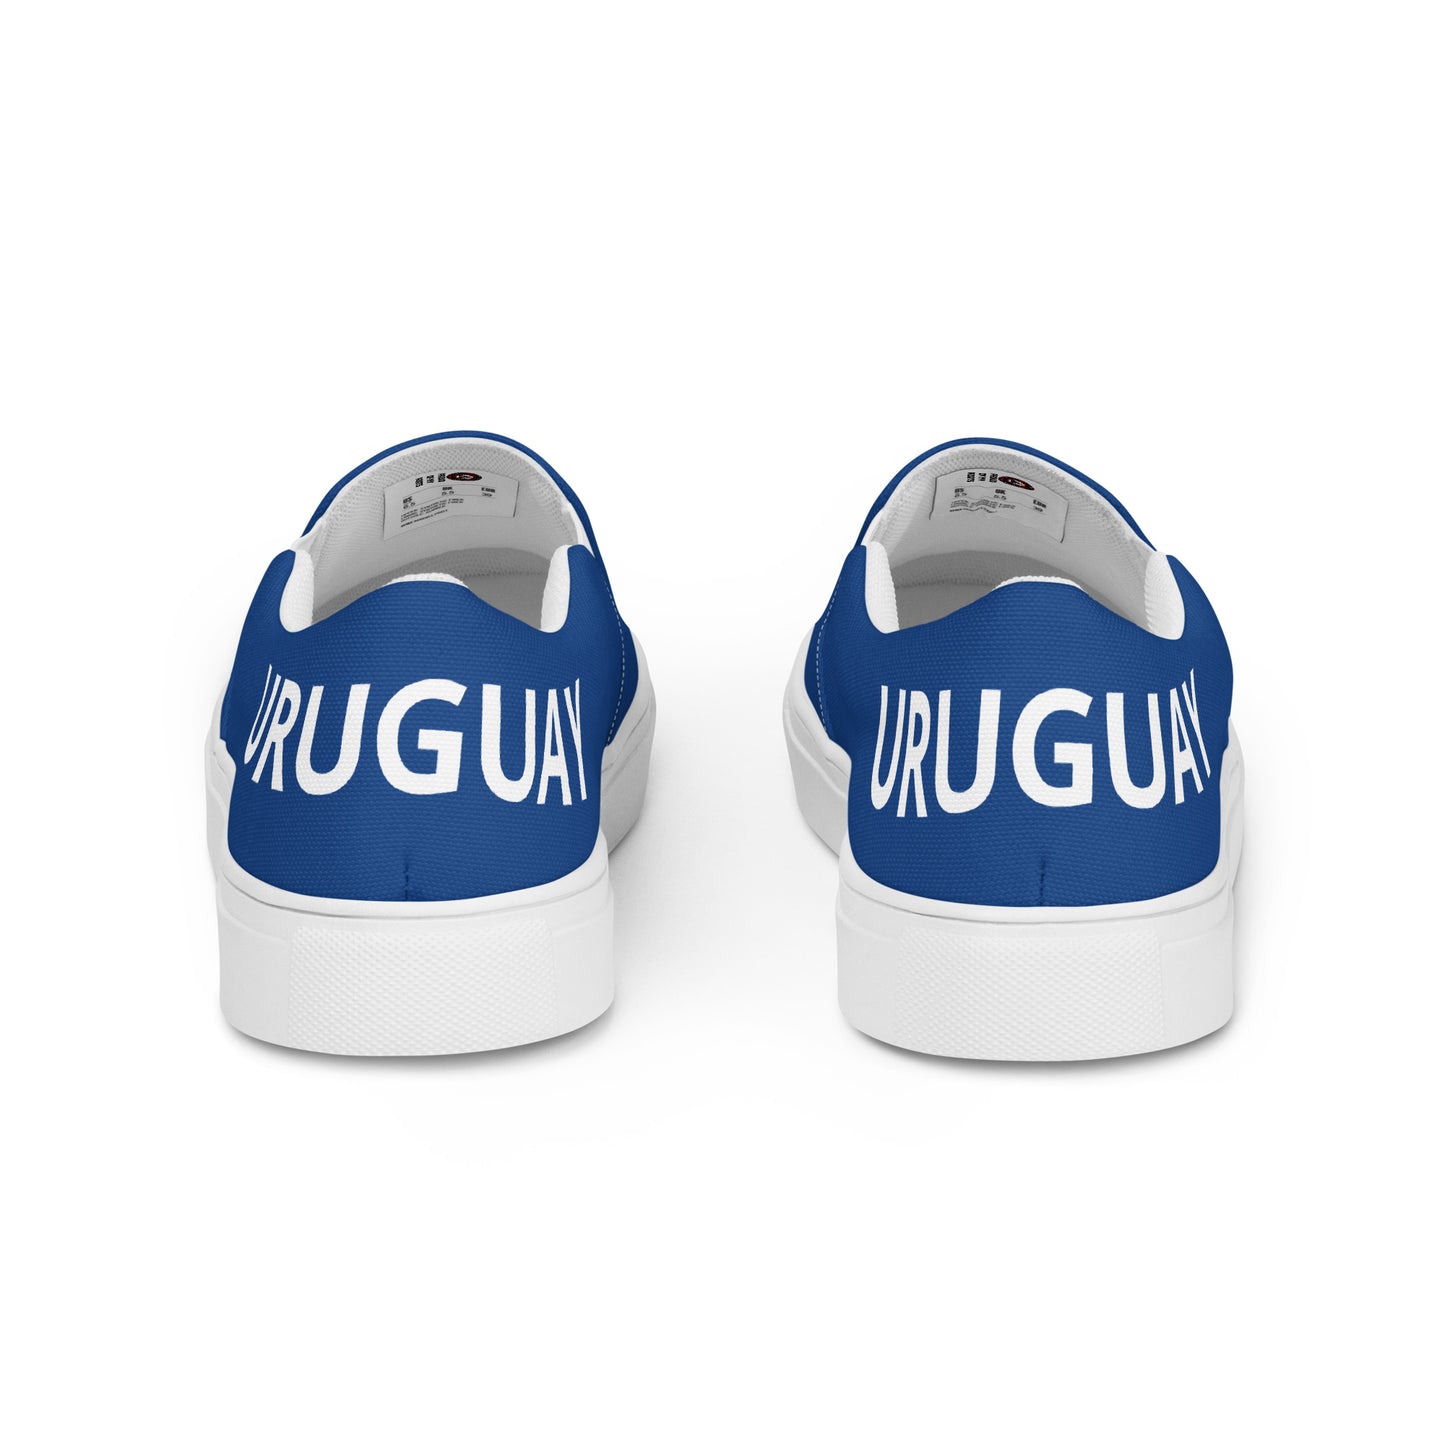 Uruguay - Women - Blue - Slip-on shoes